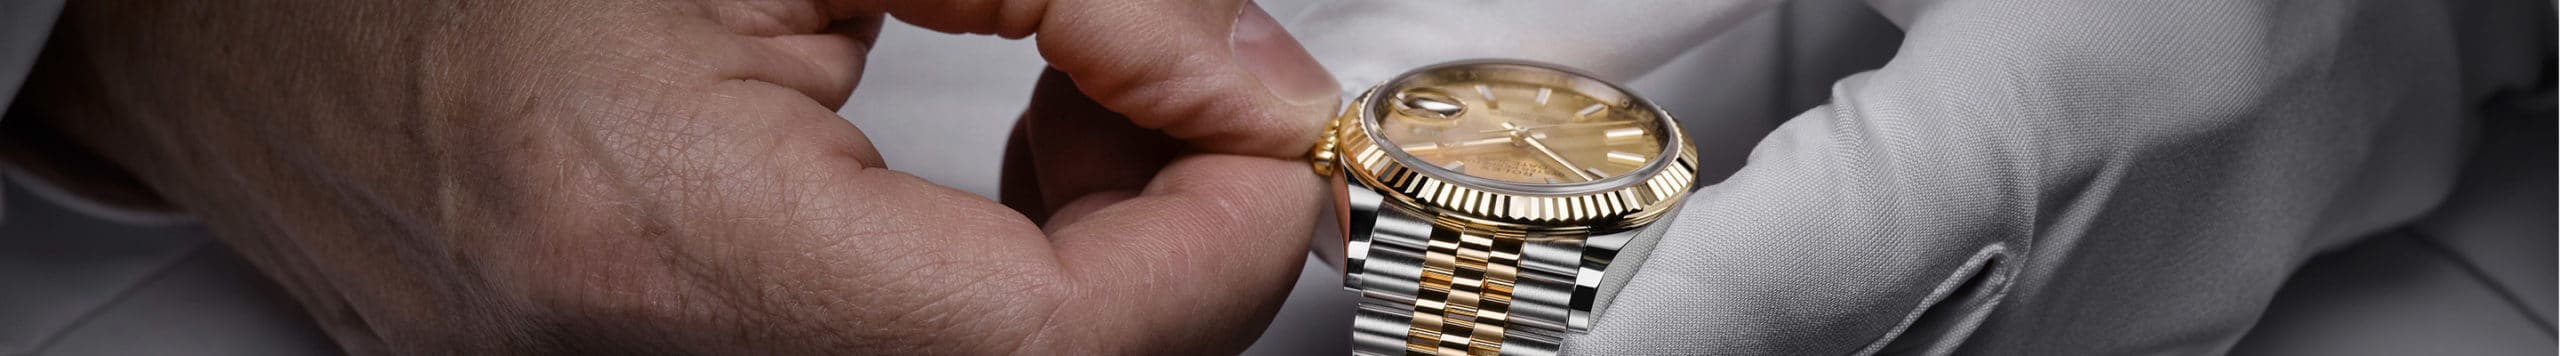 Servicing your Rolex | Rolex Official Retailer - Srichai Watch